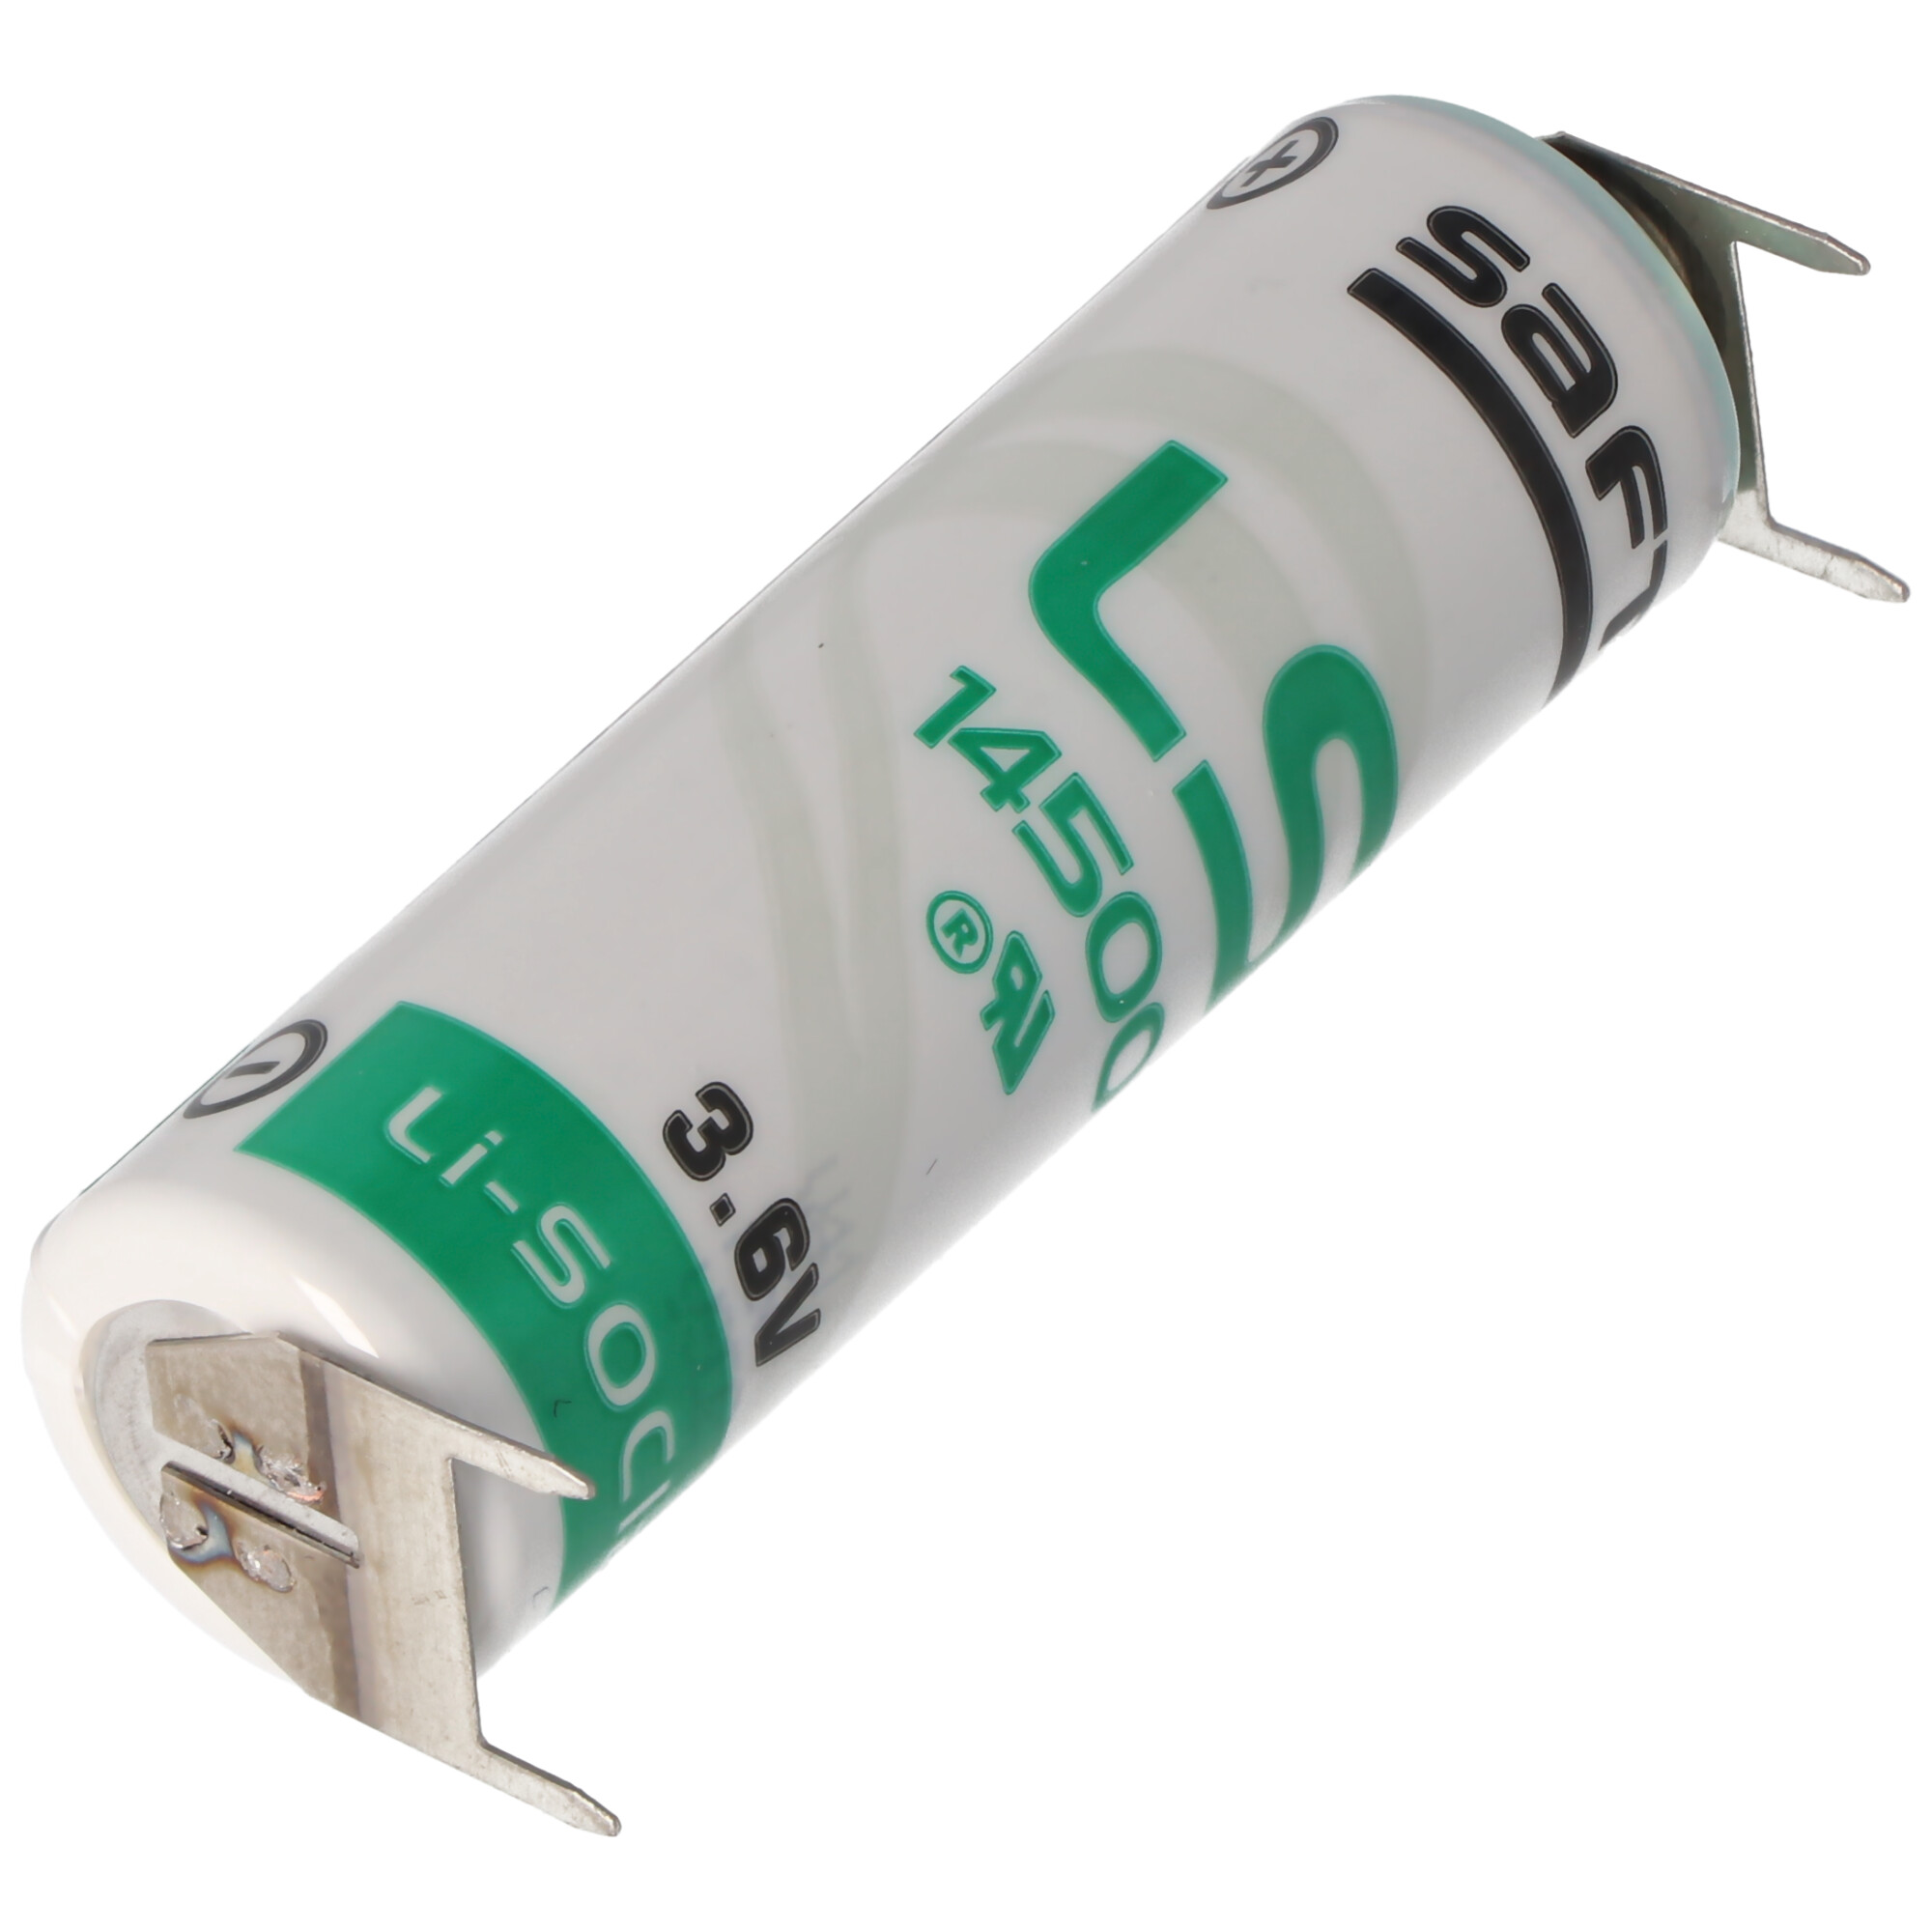 Saft LS14500 AA Lithium Batterie 3,6 Volt mit Printanschluss, LS14500 LiSOCI2 2600mAh 2er Print - / 2er Print +